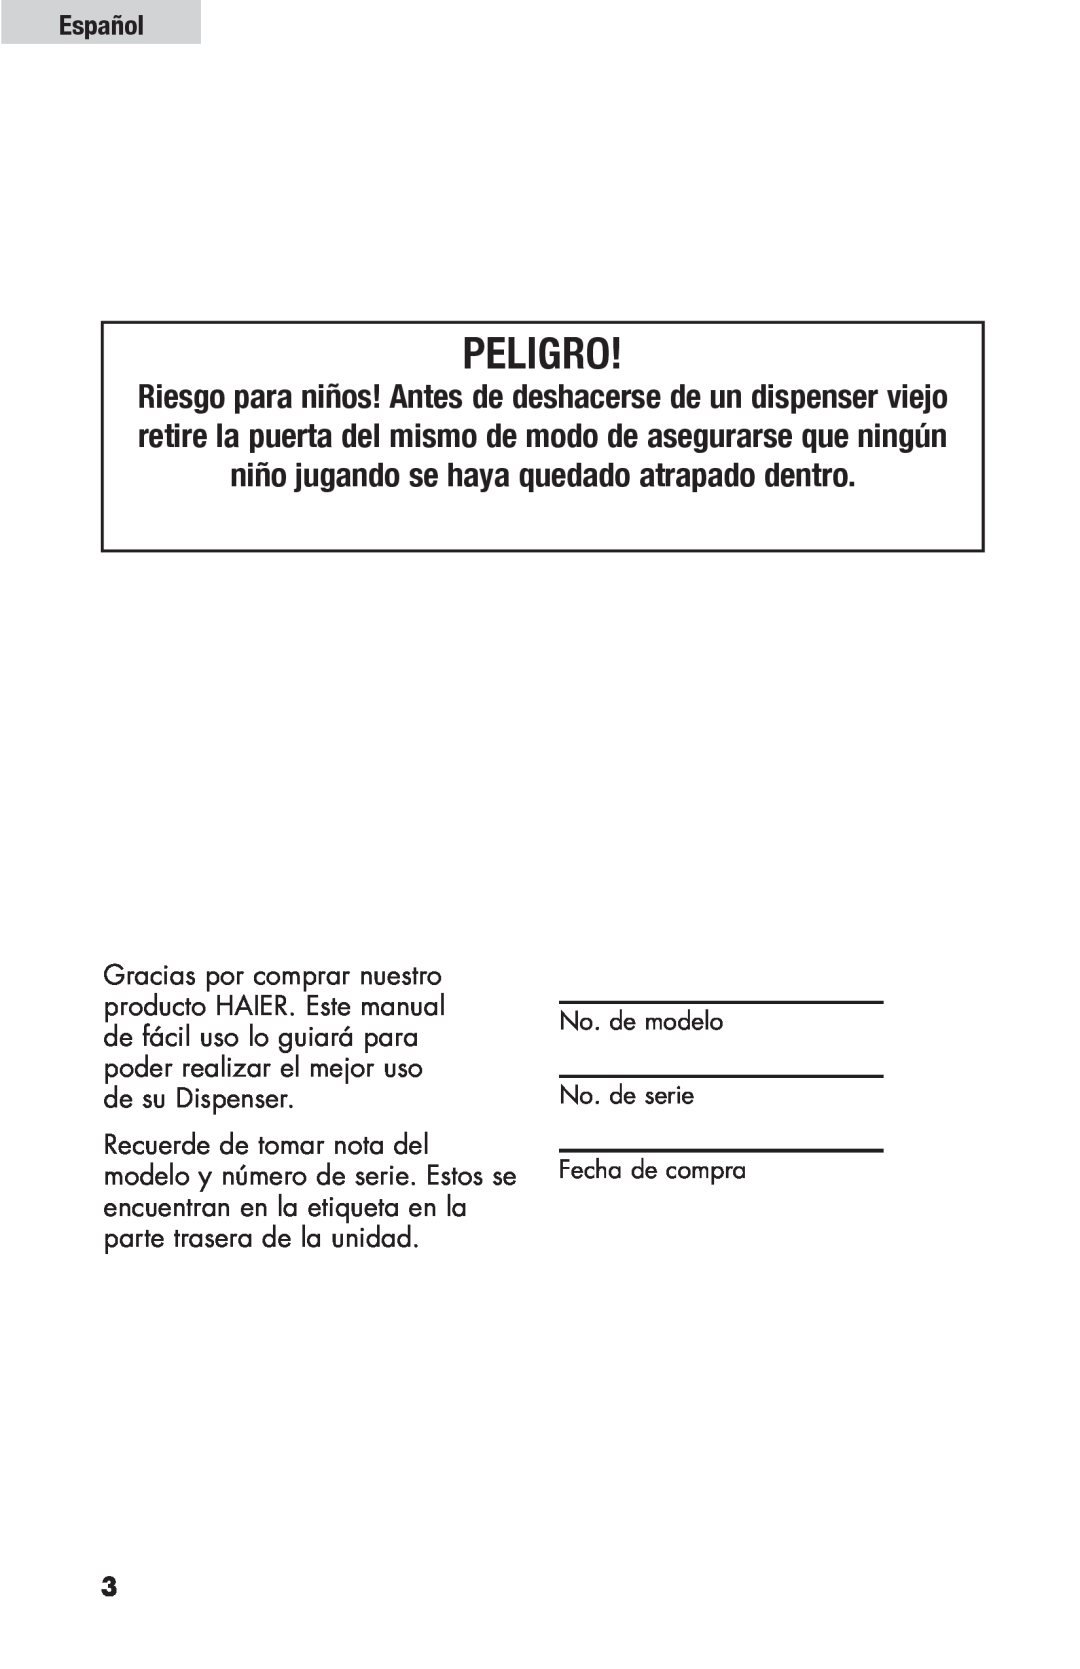 Haier HBF205E user manual Peligro, Español, No. de modelo No. de serie Fecha de compra 